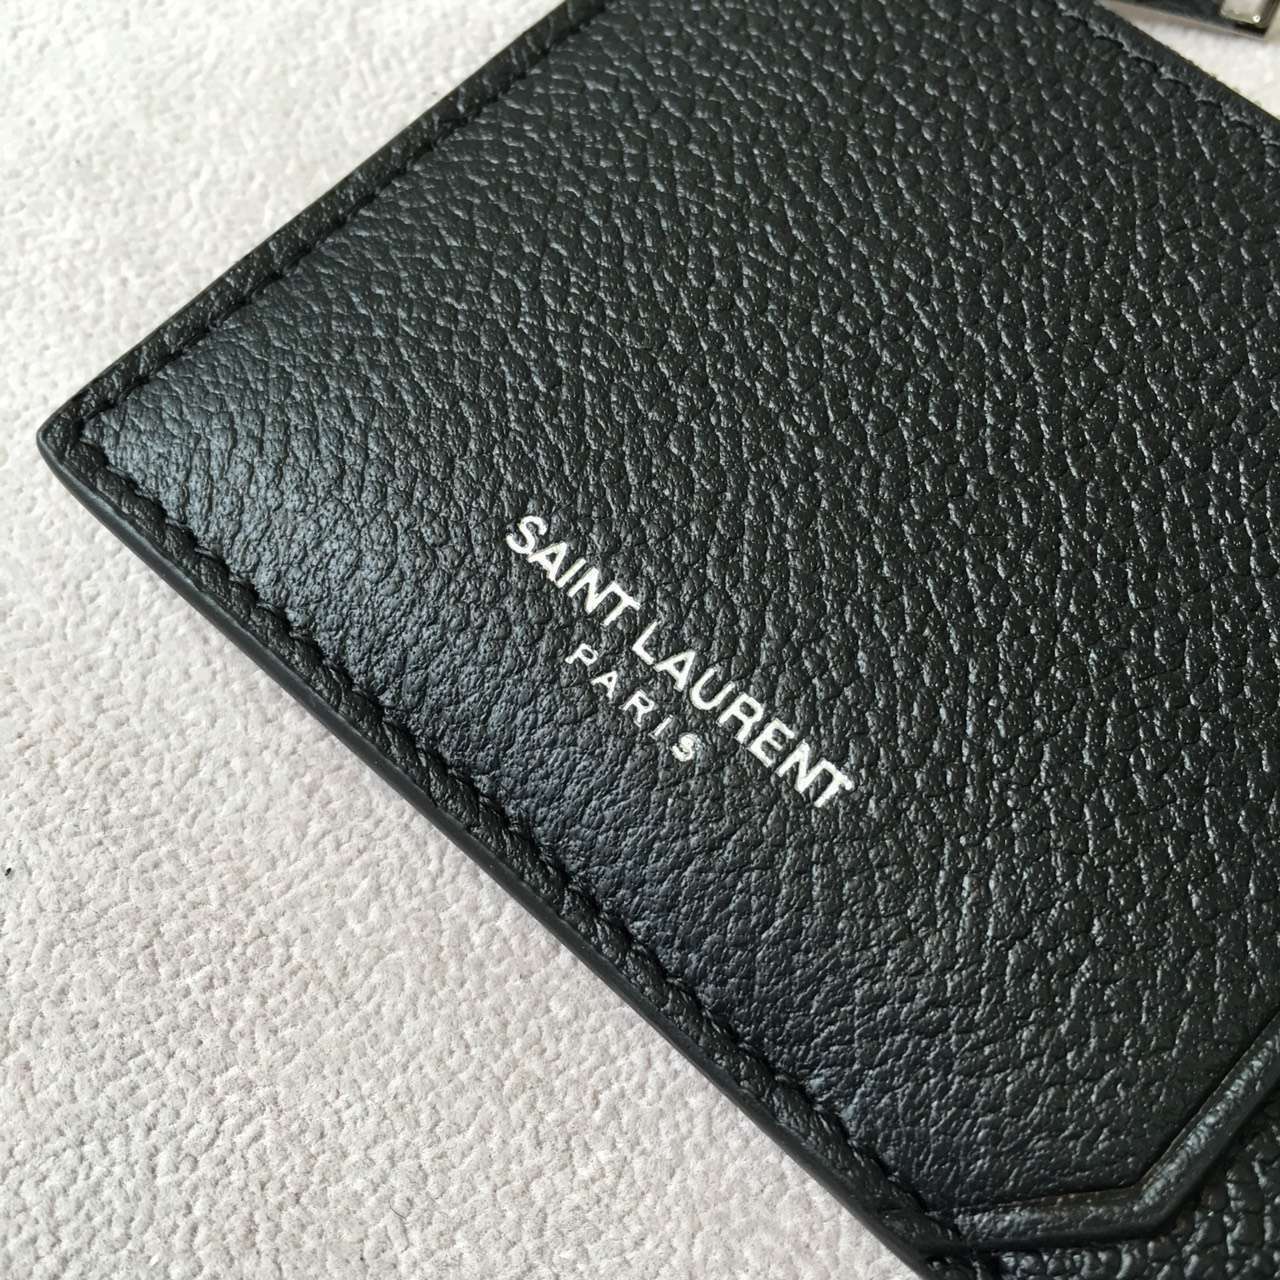 Limited Edition!2016 New Saint Laurent Small Leather Goods Cheap Sale-Saint Laurent Classic Paris 5 Fragments Zip Pouch in Black Leather - Click Image to Close